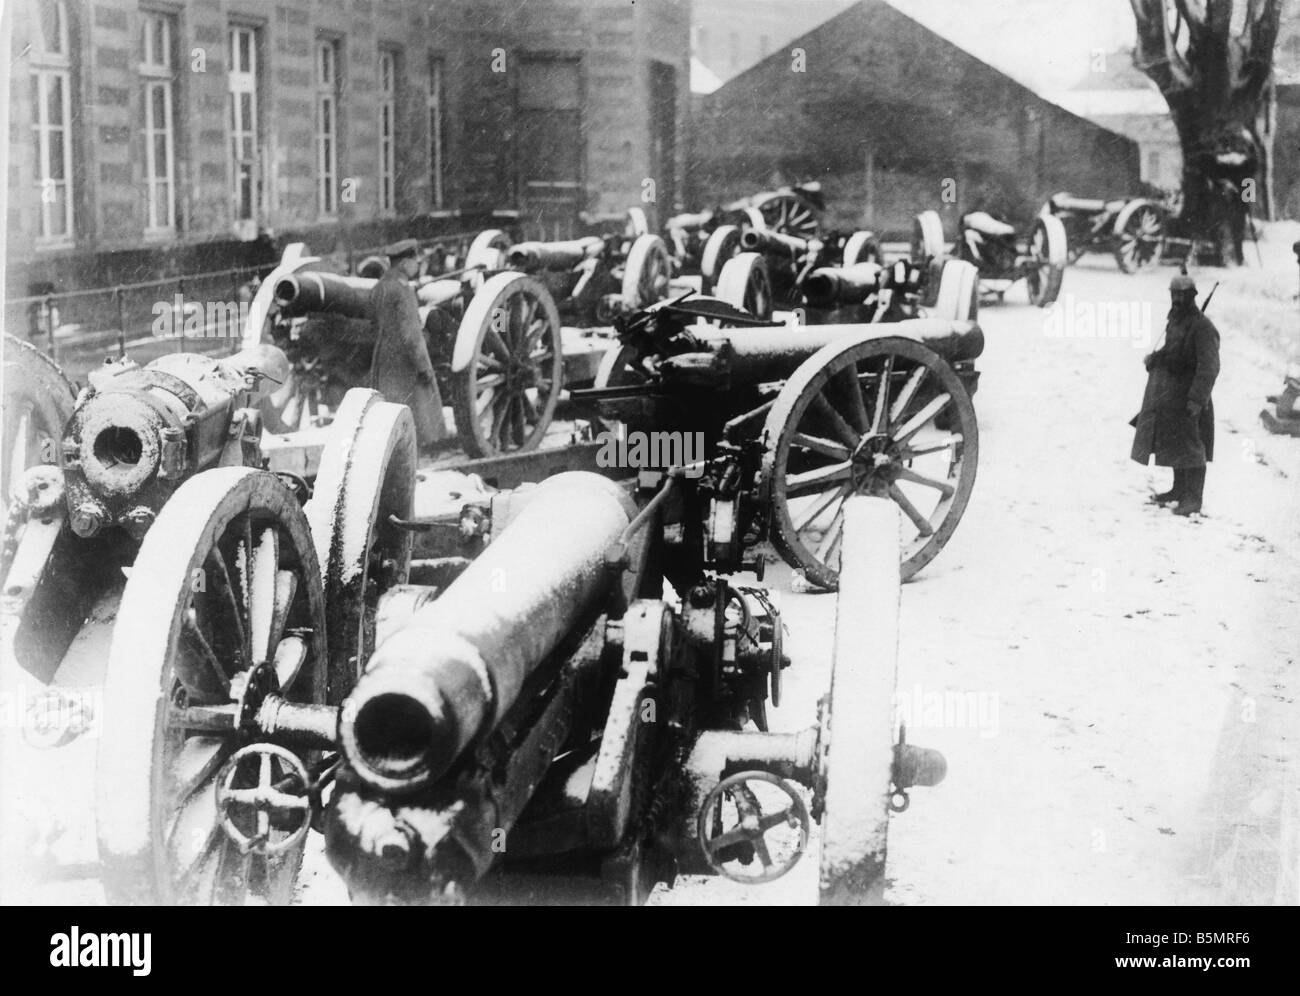 9 1917 11 20 A2 5 E Captured guns 1917 World War 1 1914 18 Western Front Tank battle at Cambrai 20th 29th Novem ber 1917 Attack Stock Photo